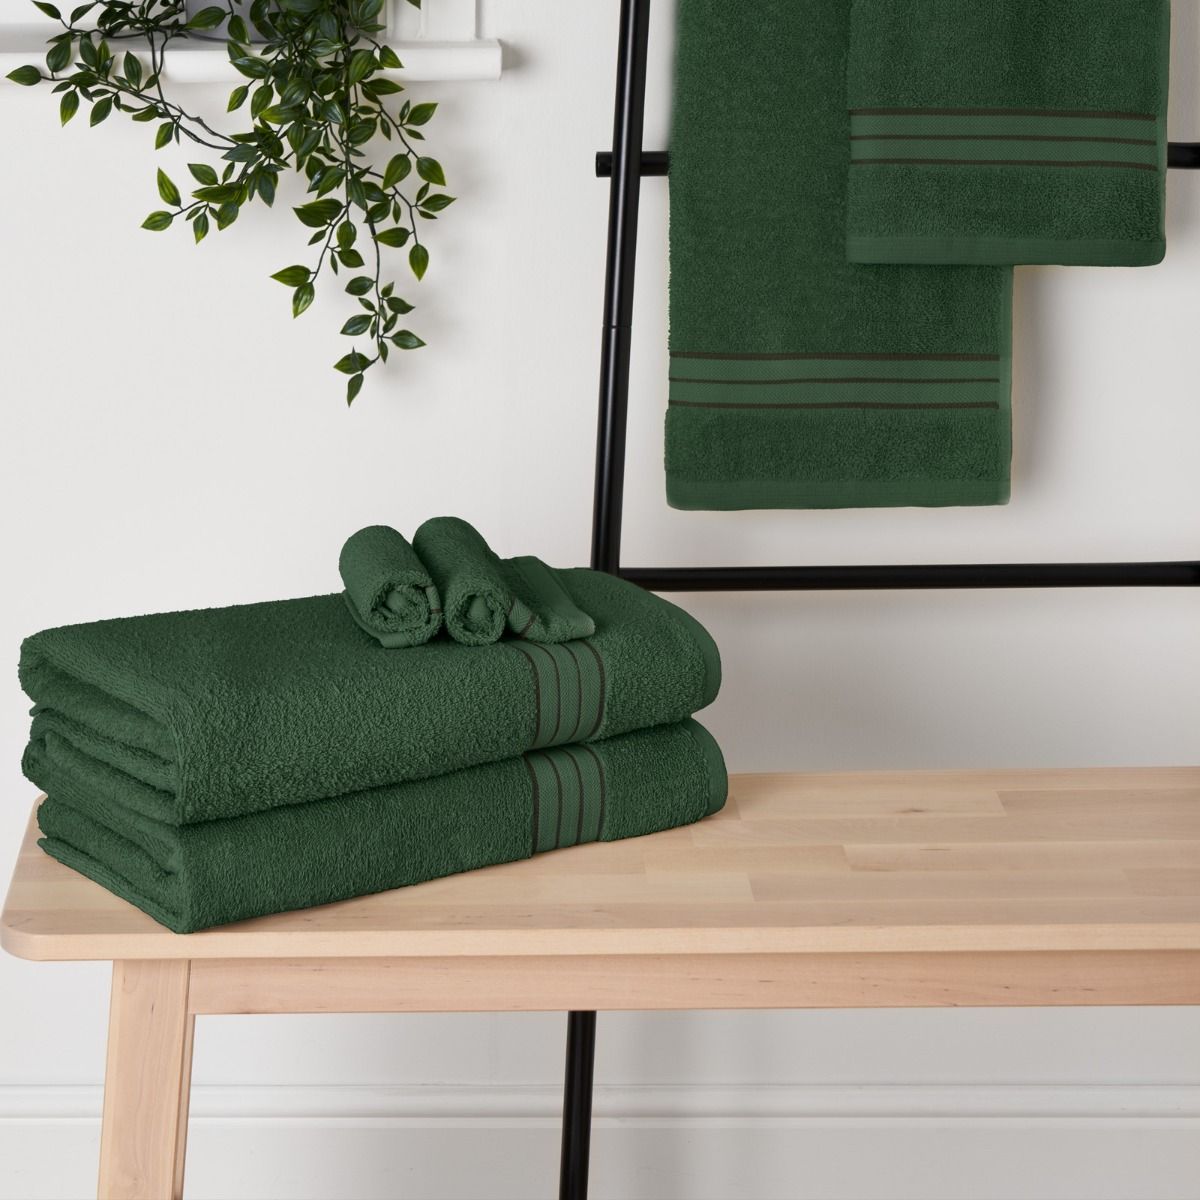 Brentfords 100% Cotton Bath Towel, Forest Green - 1PC